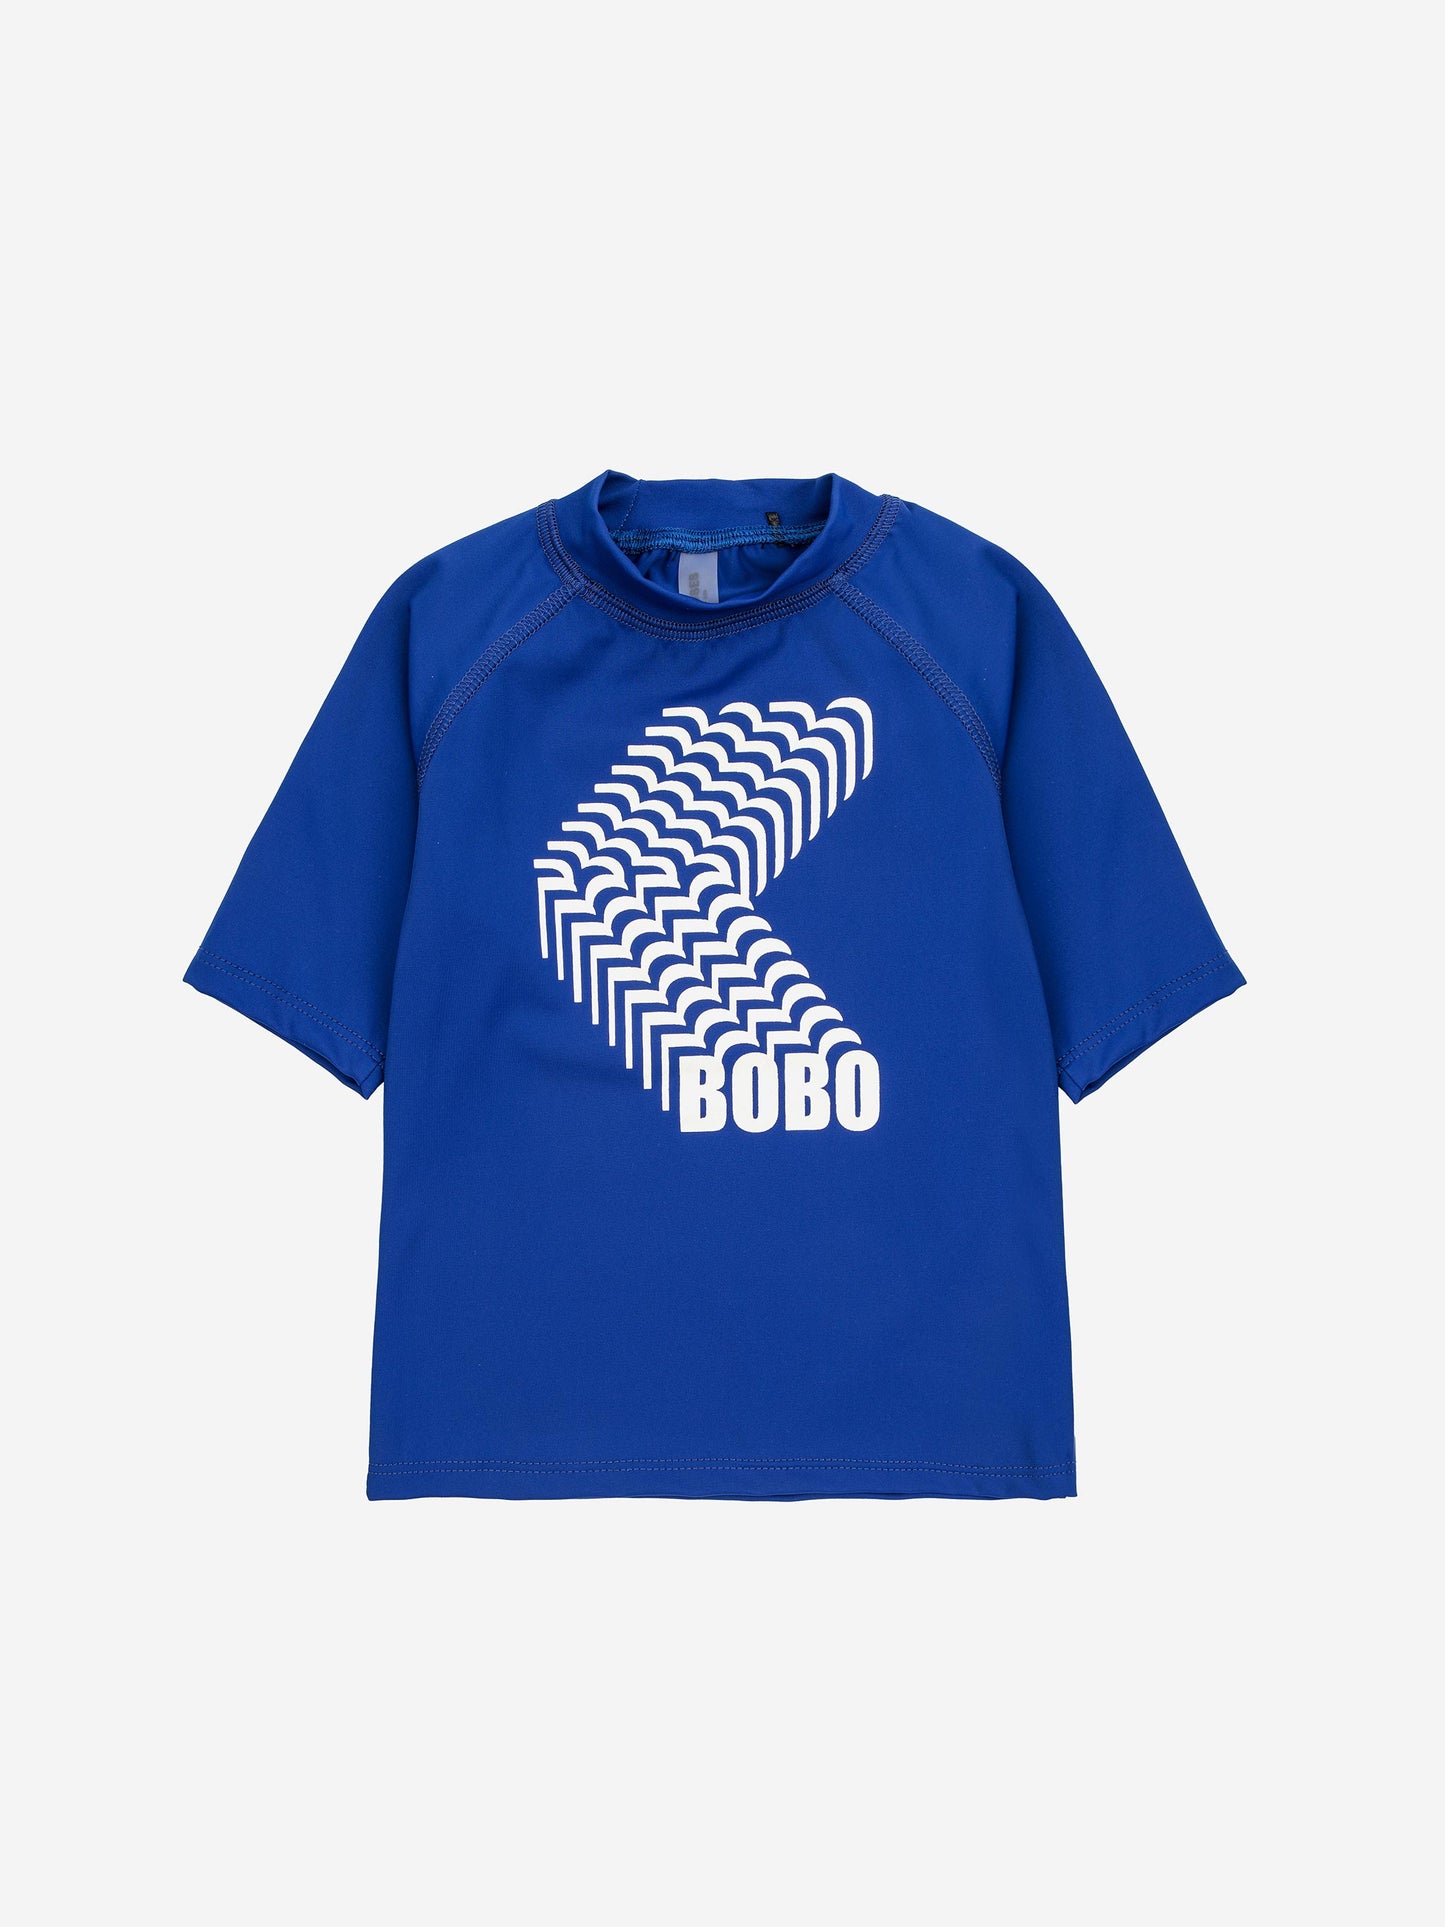 Bobo Shadow swim t-shirt